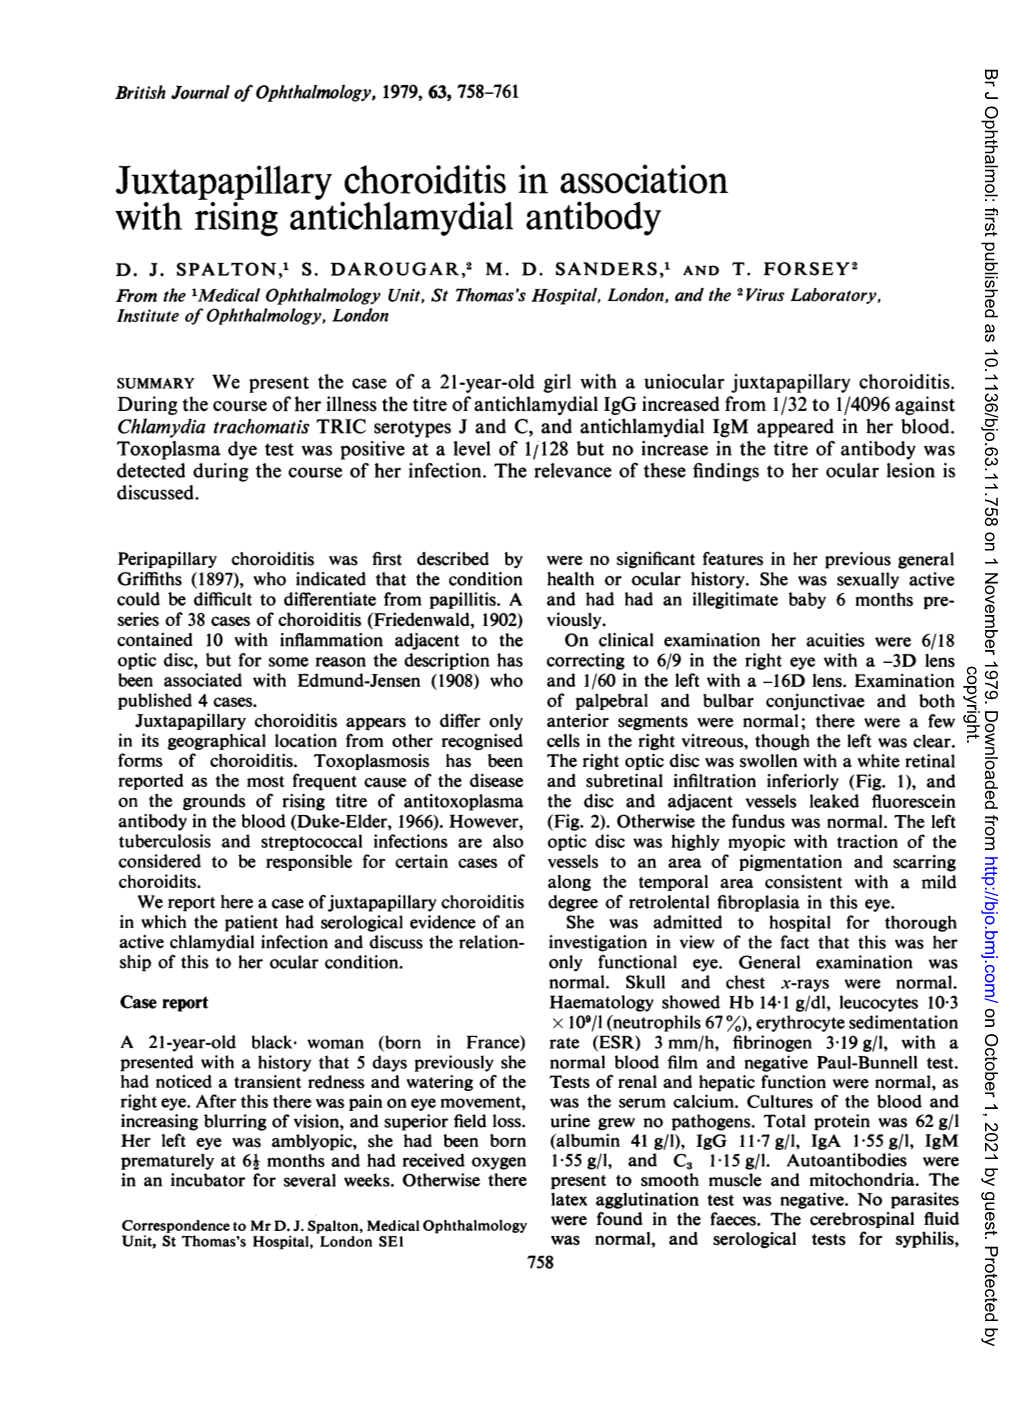 Juxtapapillary Choroiditis in Association with Rising Antichlamydial Antibody